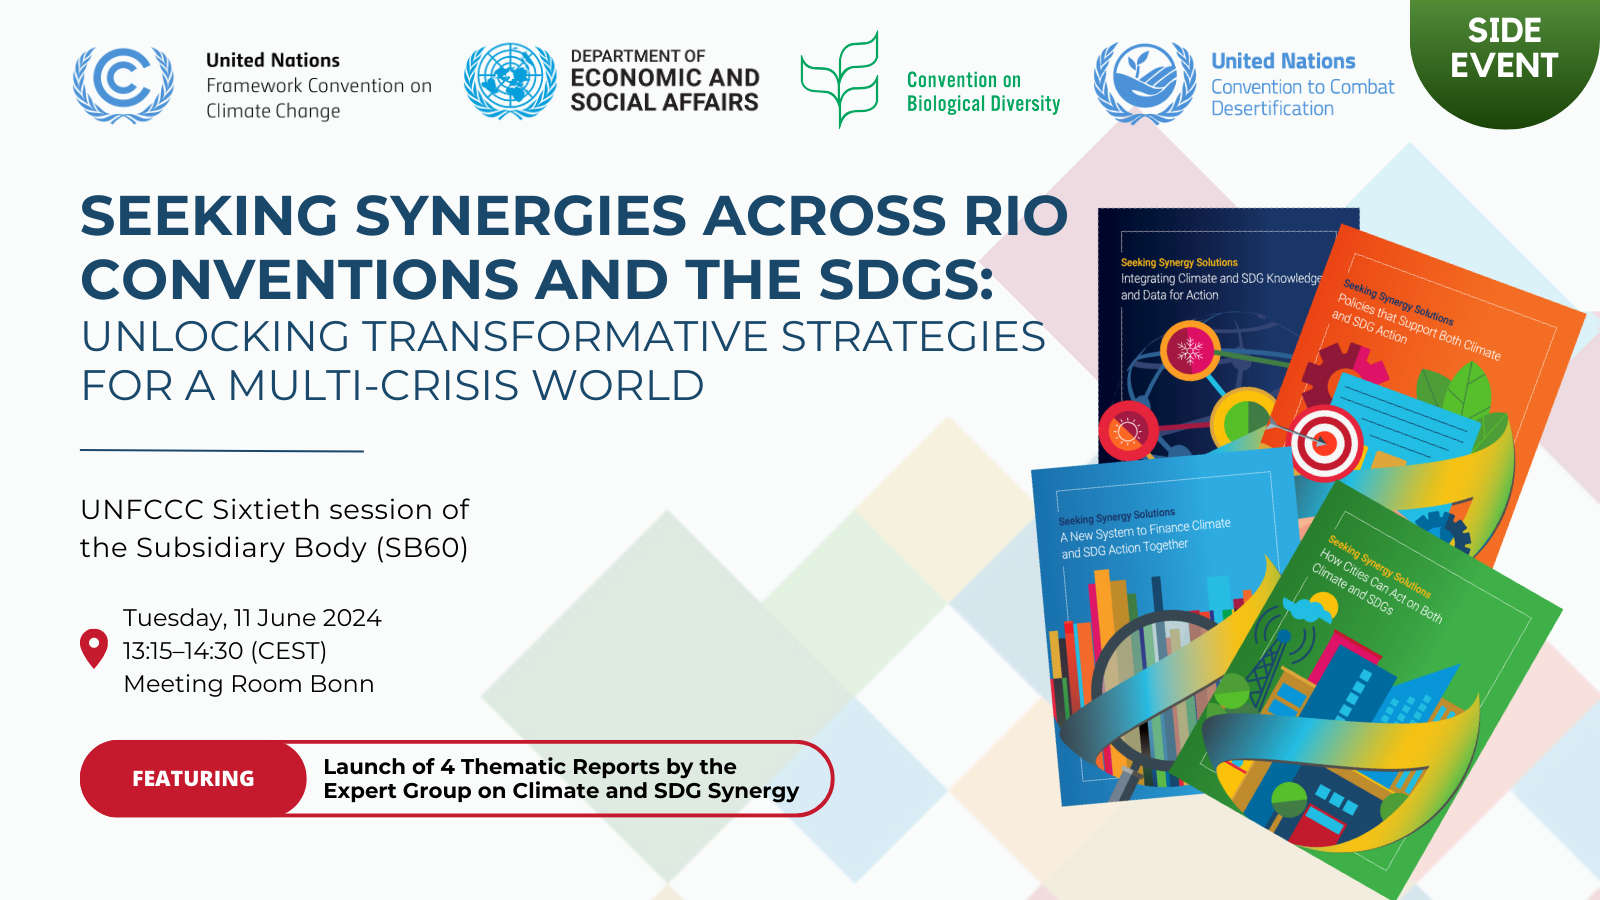 SB60 side event on Climate-SDG Synergy